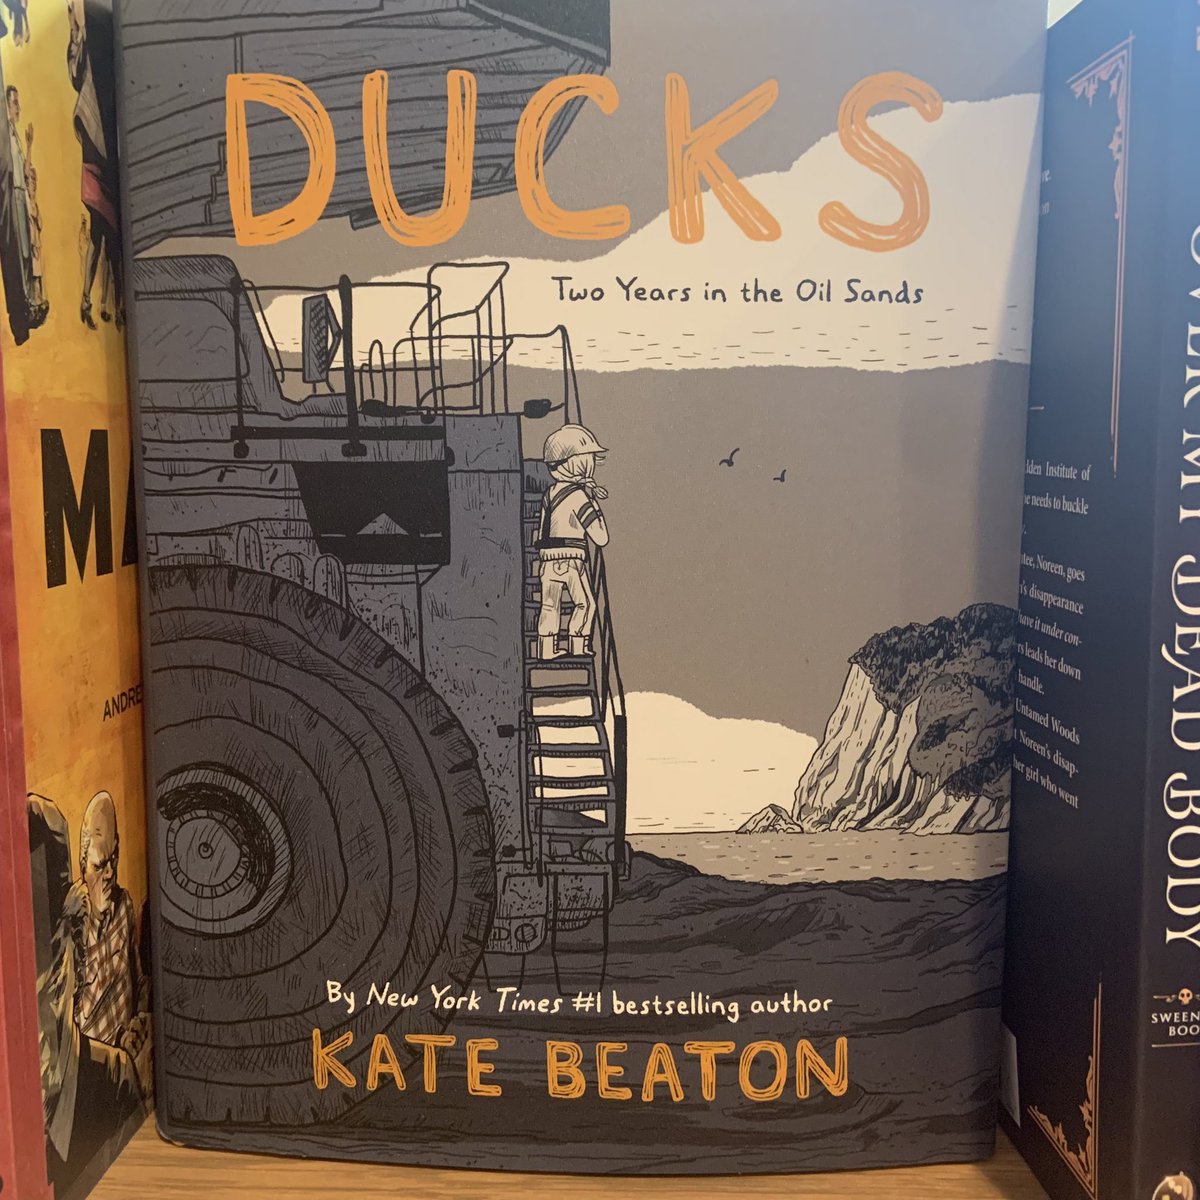 Congratulations to Kate Beaton and her autobiographical graphic memoir, Ducks, for winning the 2023 #canadareads competition. 

#ducks #graphicmemoir #oilsands #alberta #canada #okotoks #readmorebooks #indiebookstore